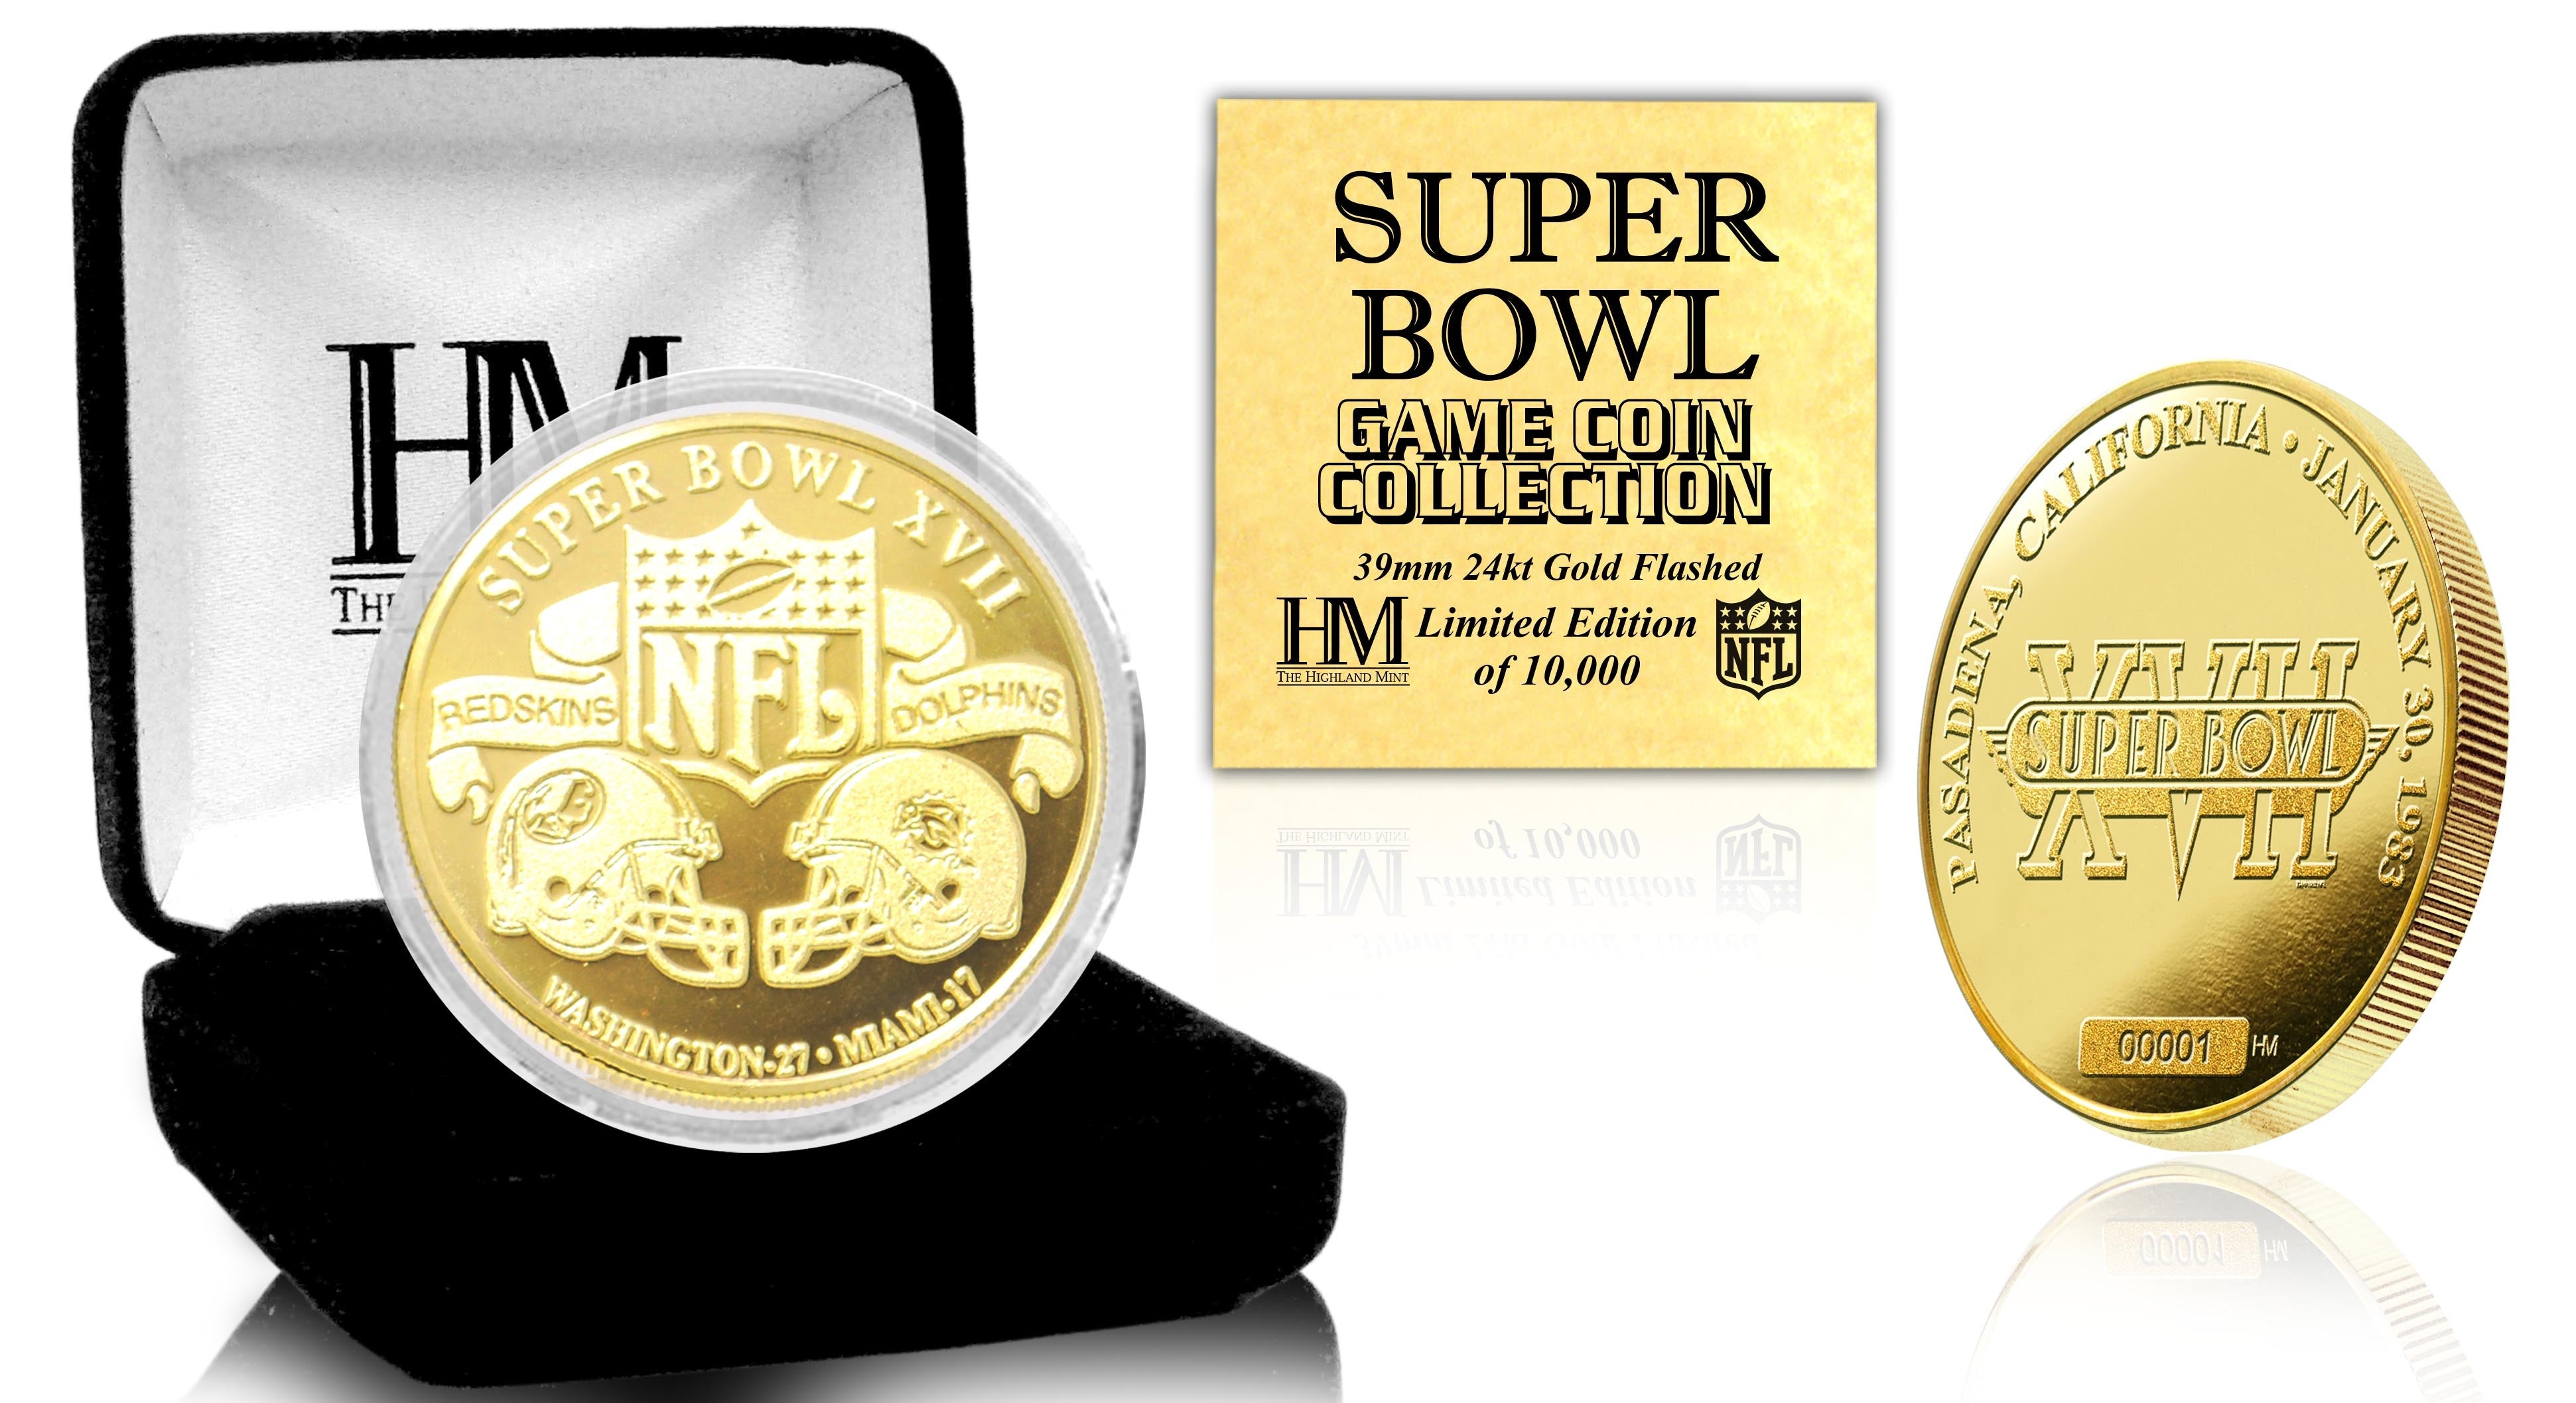 Super Bowl XVII 24kt Gold Flip Coin